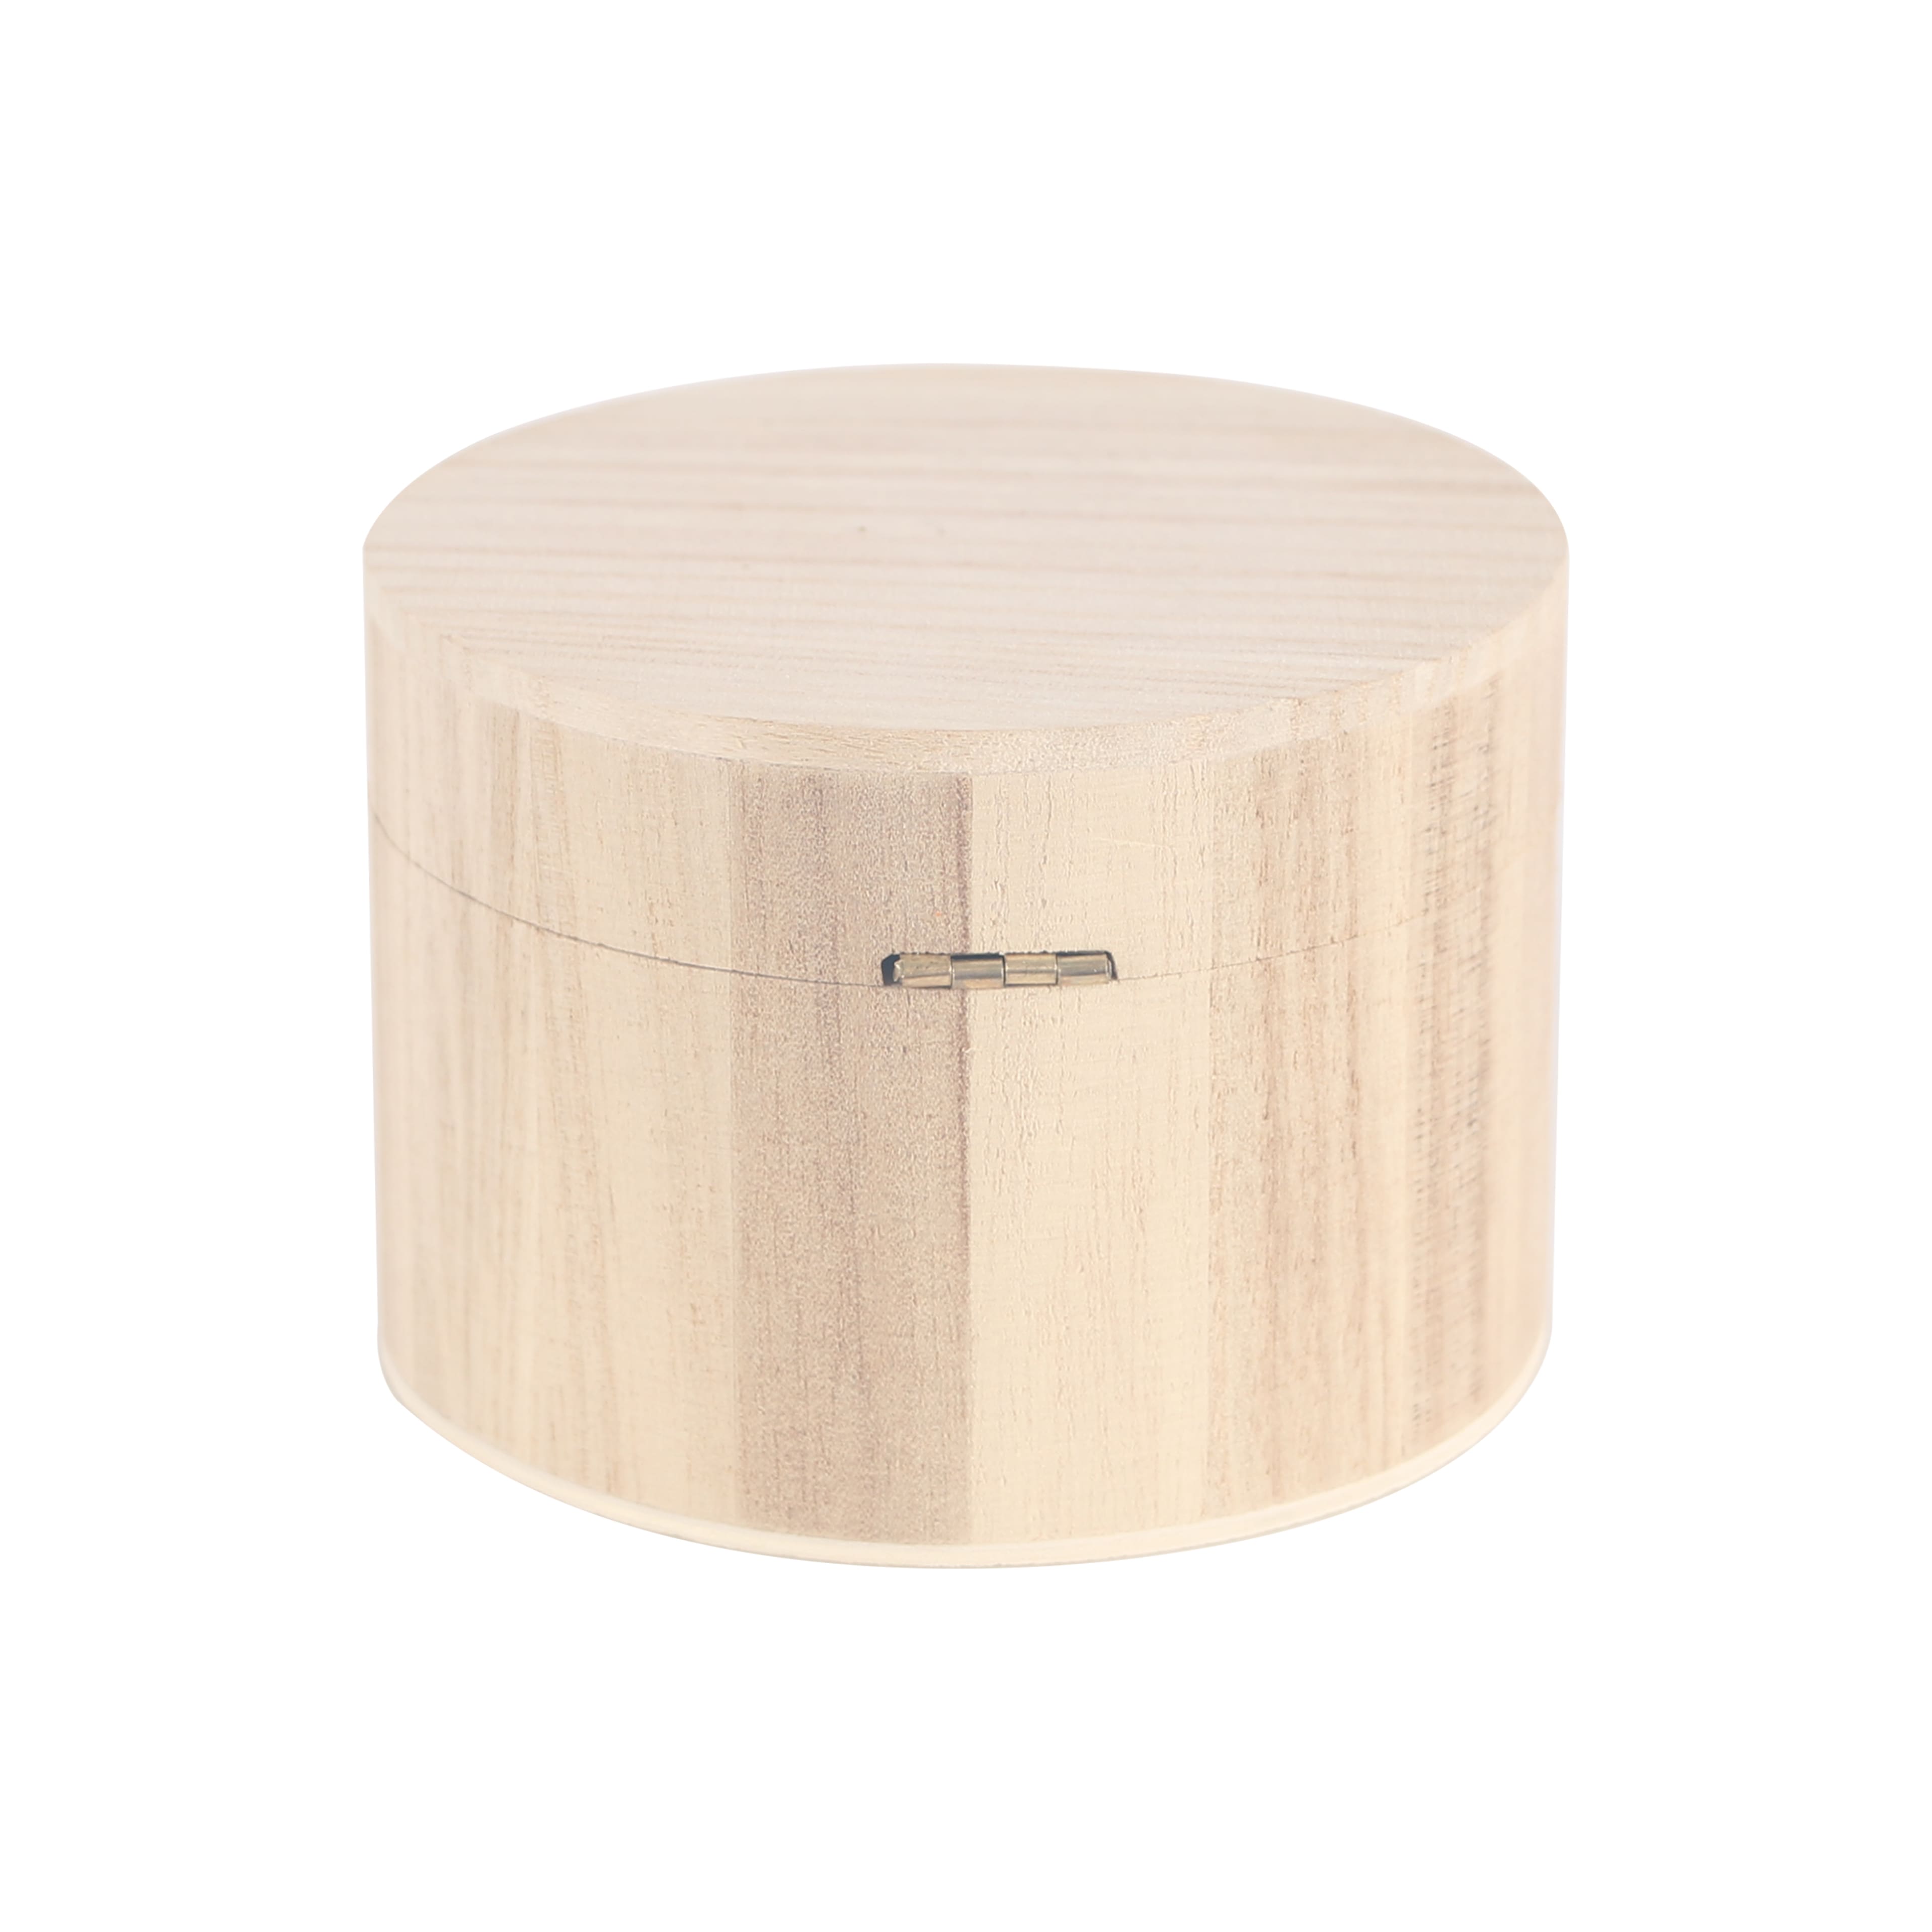 Wooden Box By Make Market®, Michaels